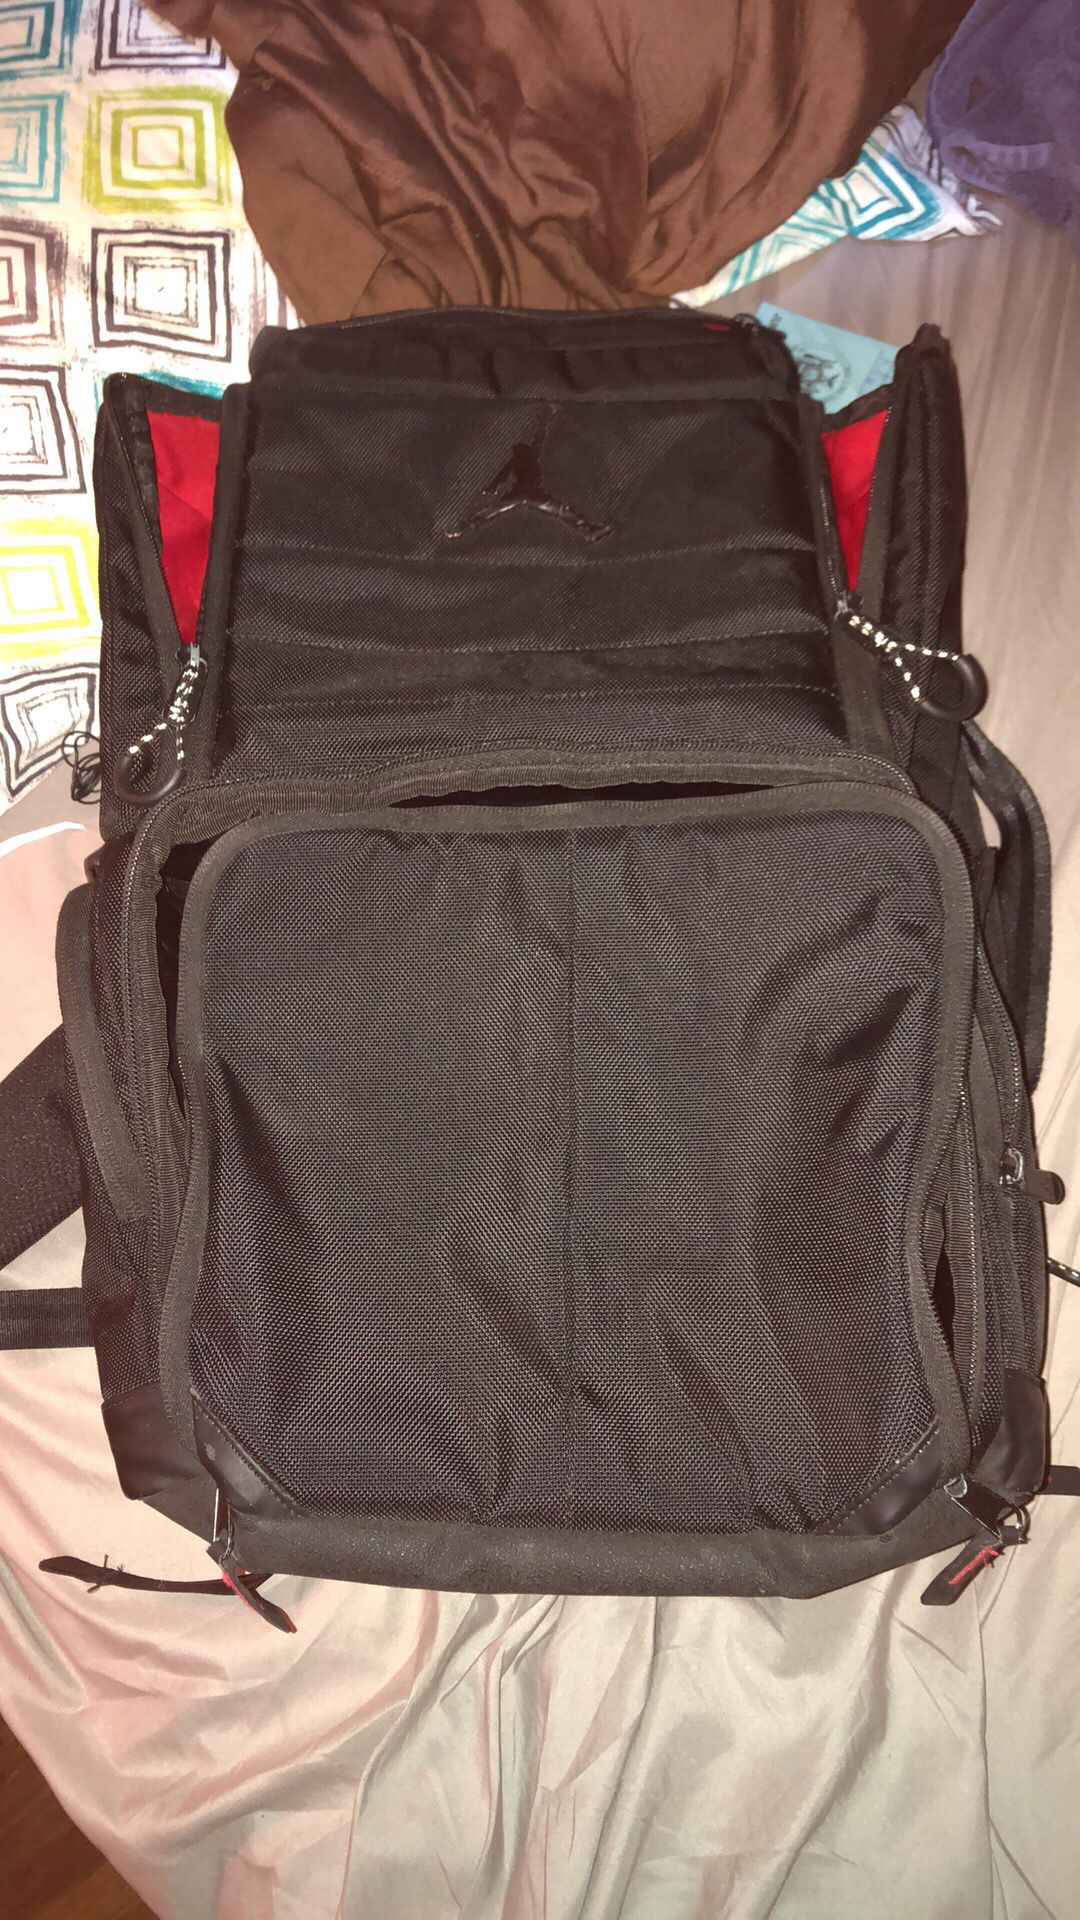 "Jordan 12s collectors pack" backpack